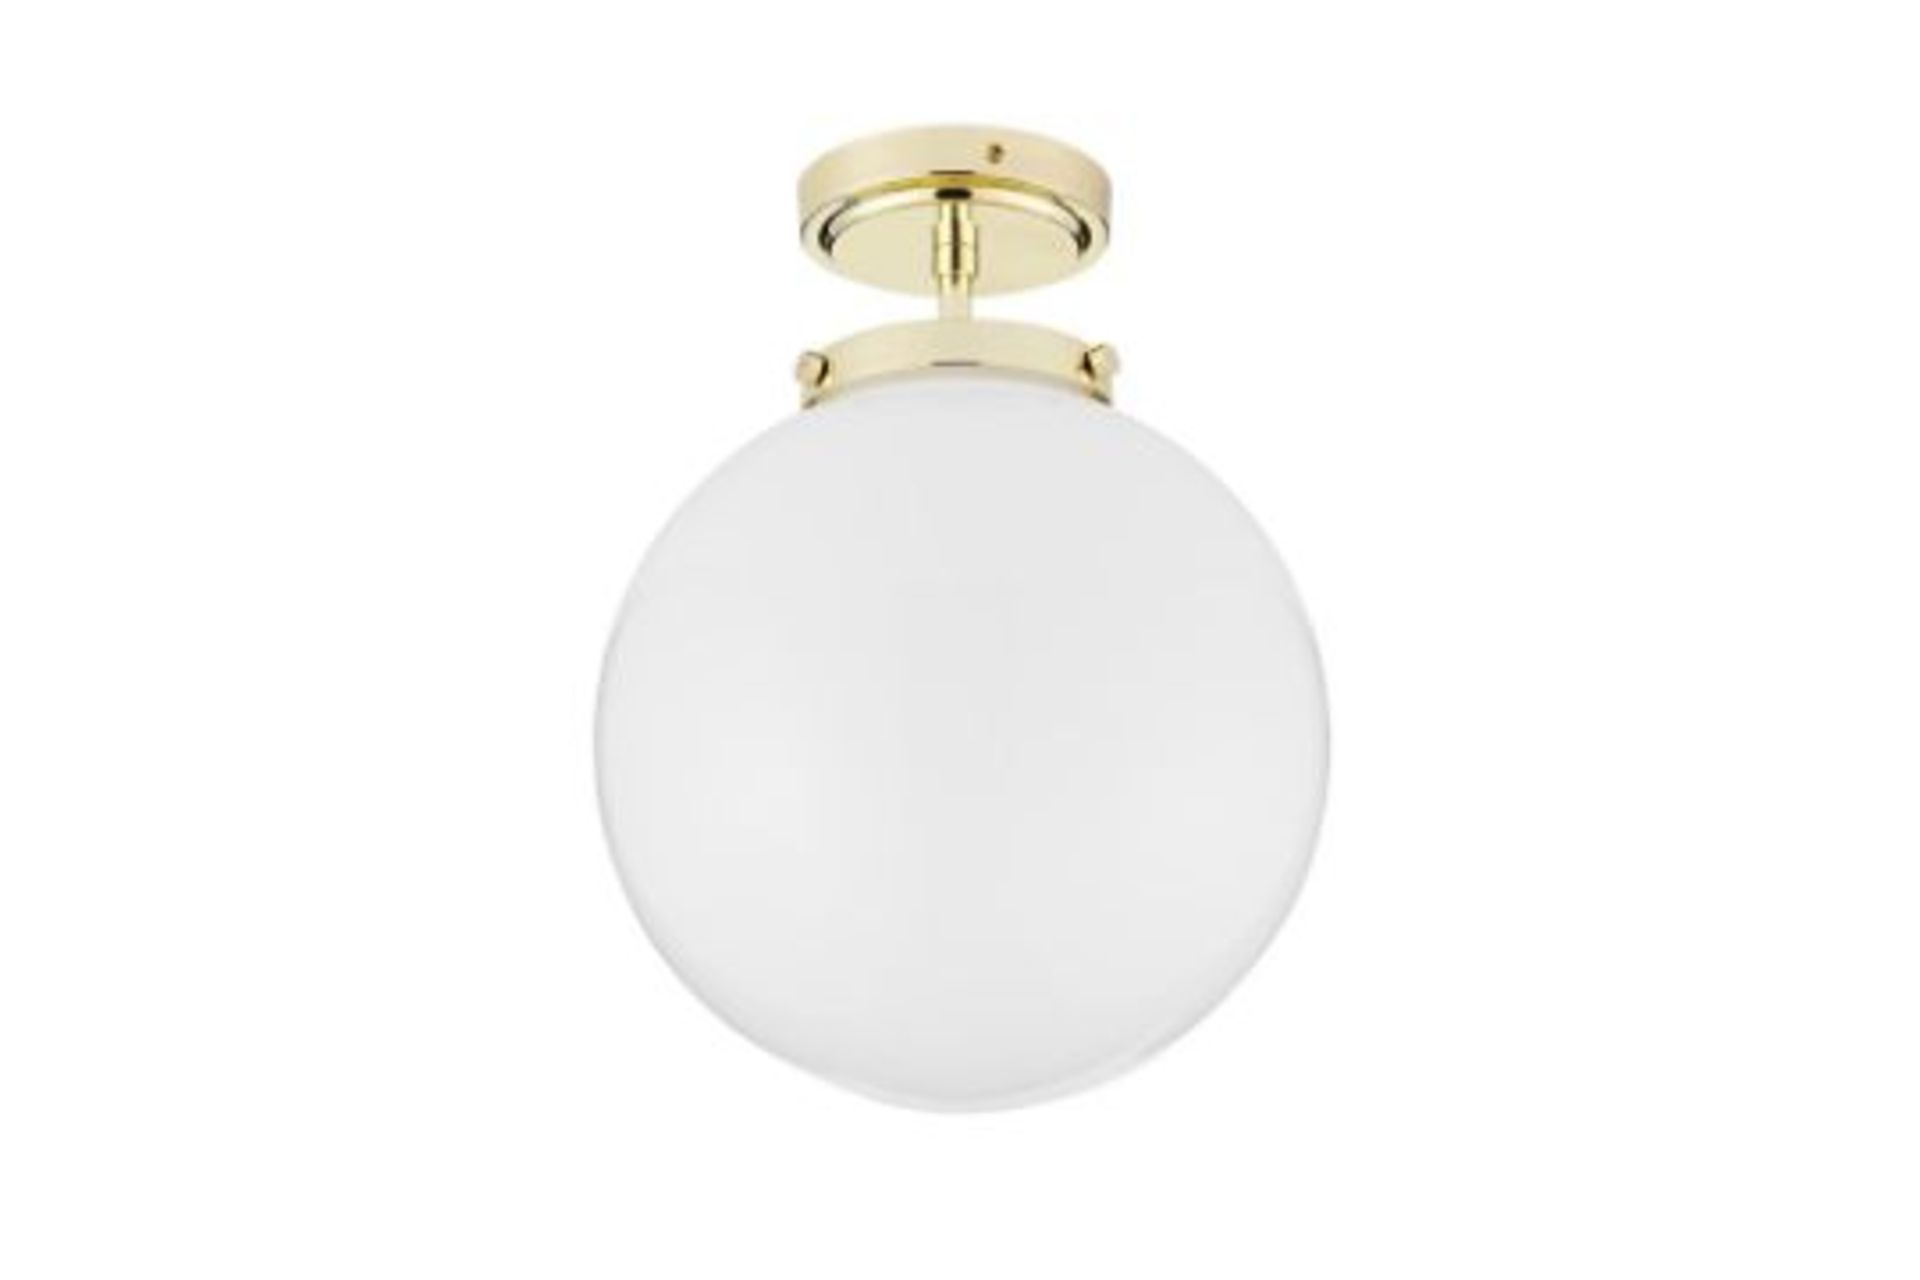 Spa Porto Single Globe Semi-Flush Ceiling Light Opal and Brass - ER48. The Spa Porto semi-flush